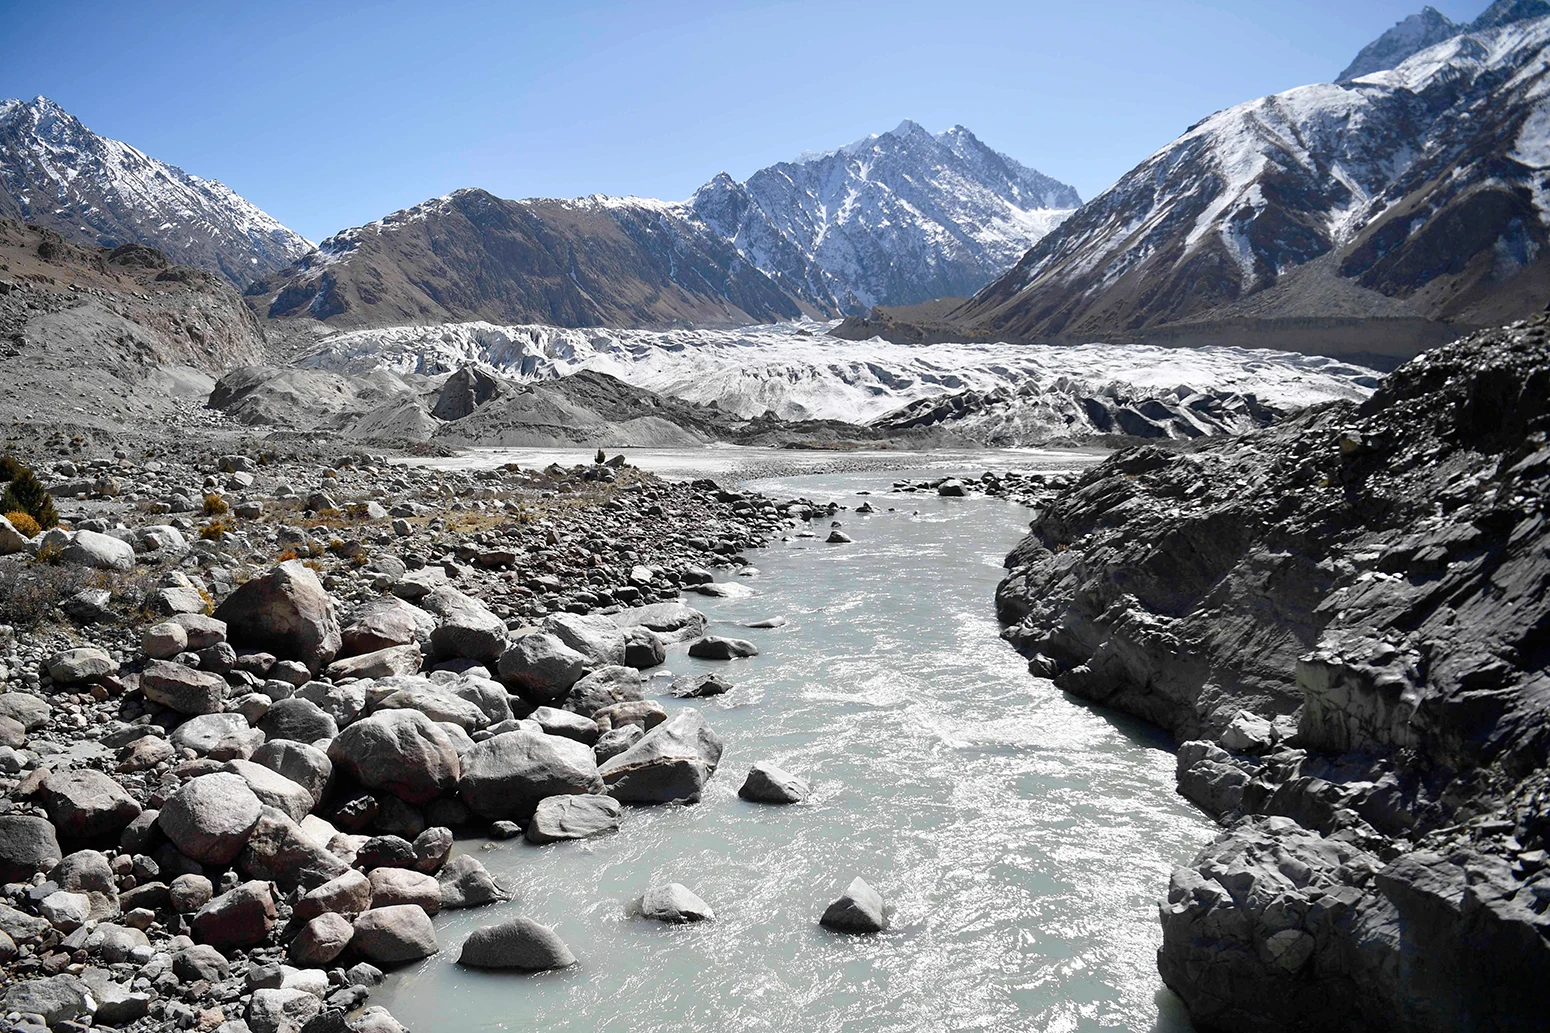 De Chiatibo-gletsjer in het Hindu Kush-gebergte in het Chitral-district van de provincie Khyber-Pakhunkwa in Pakistan.